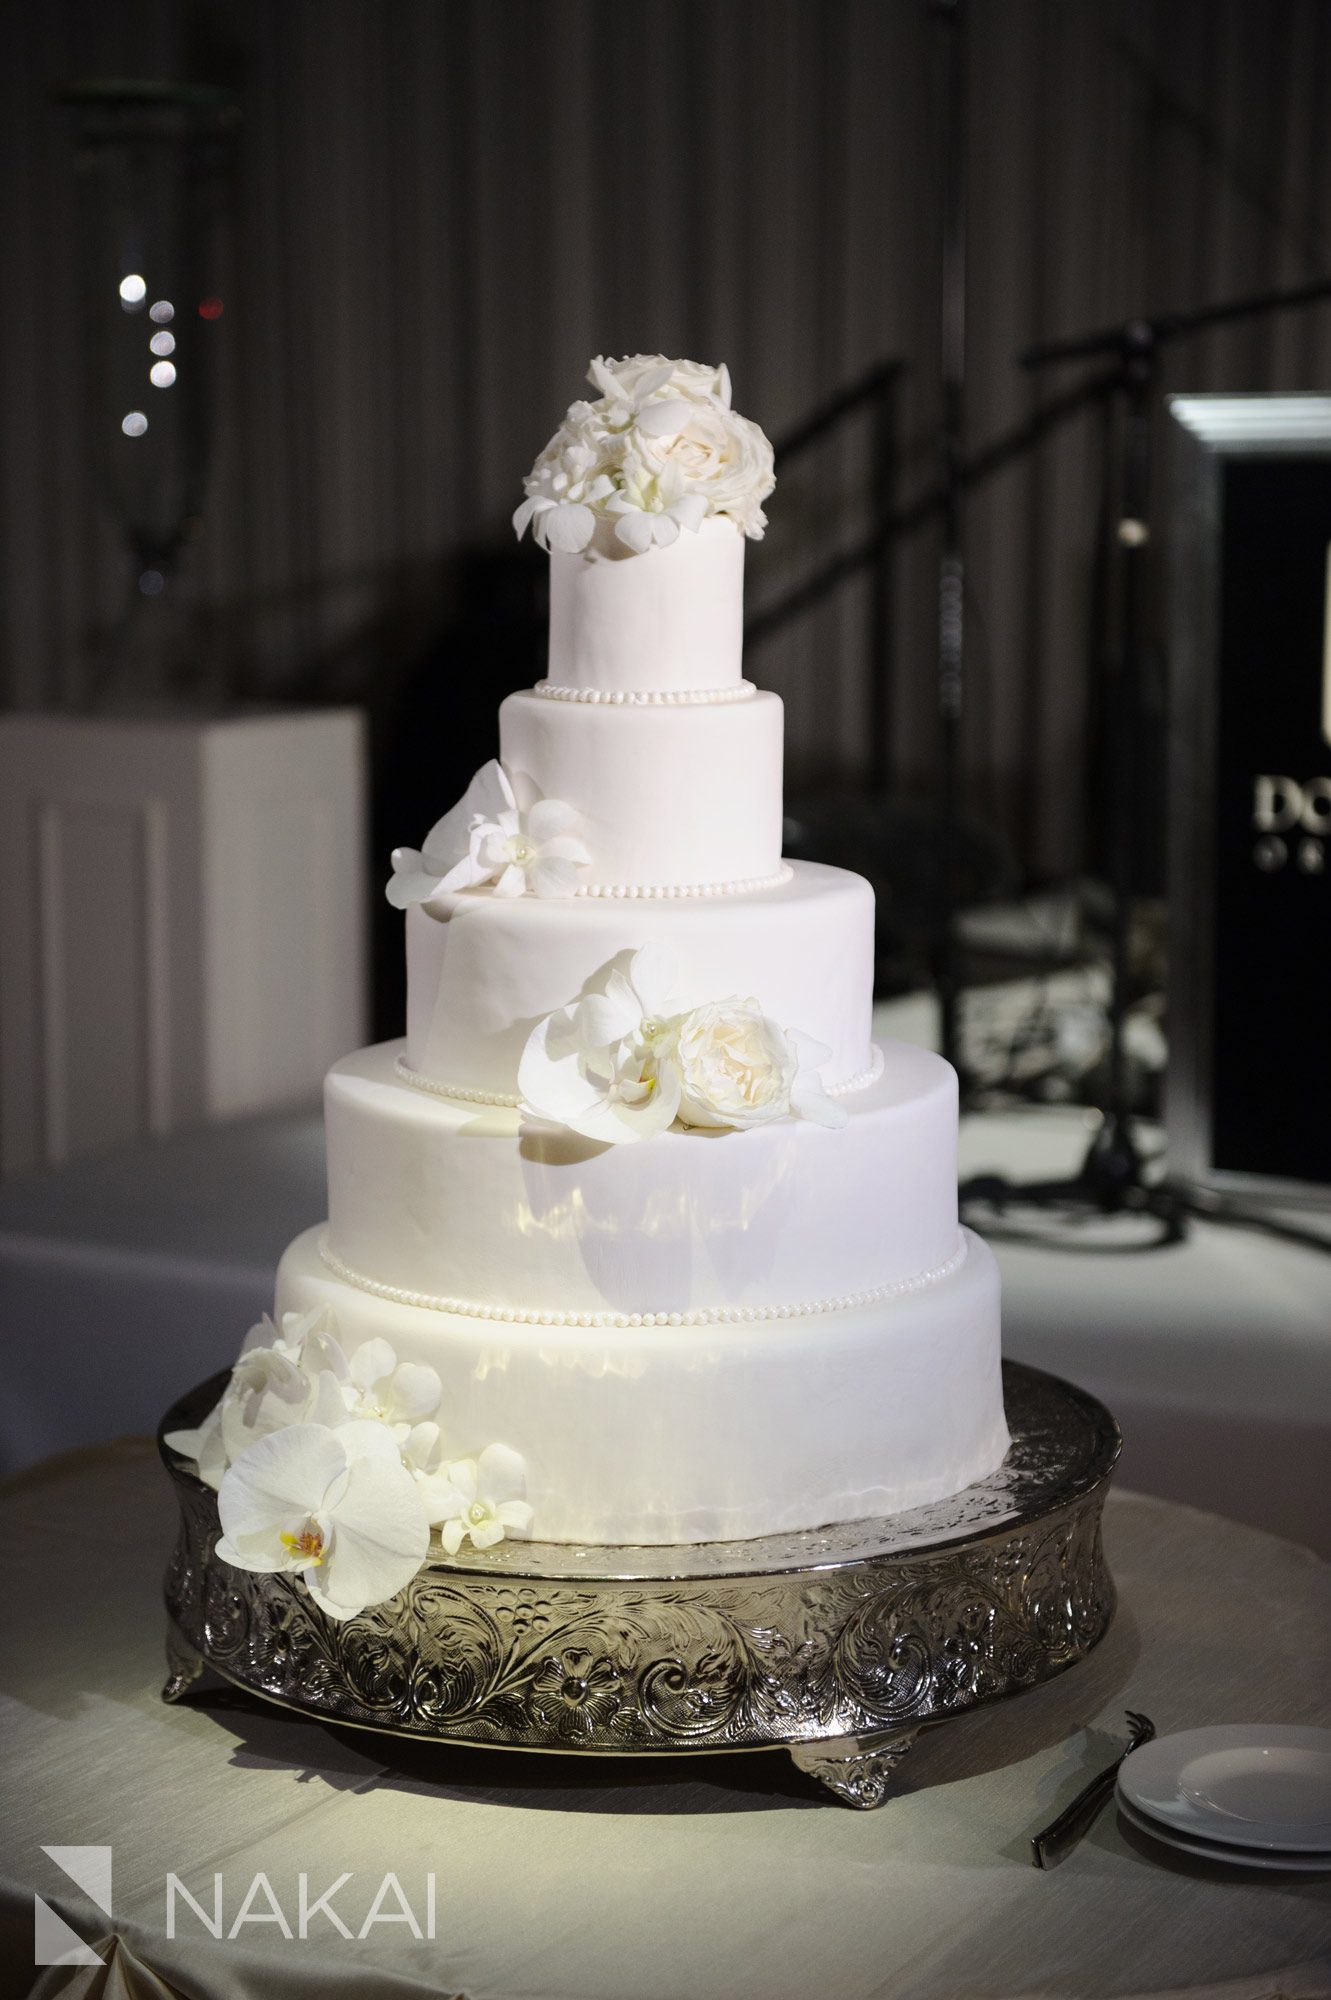 Fairmont Chicago luxury wedding picture cake reception